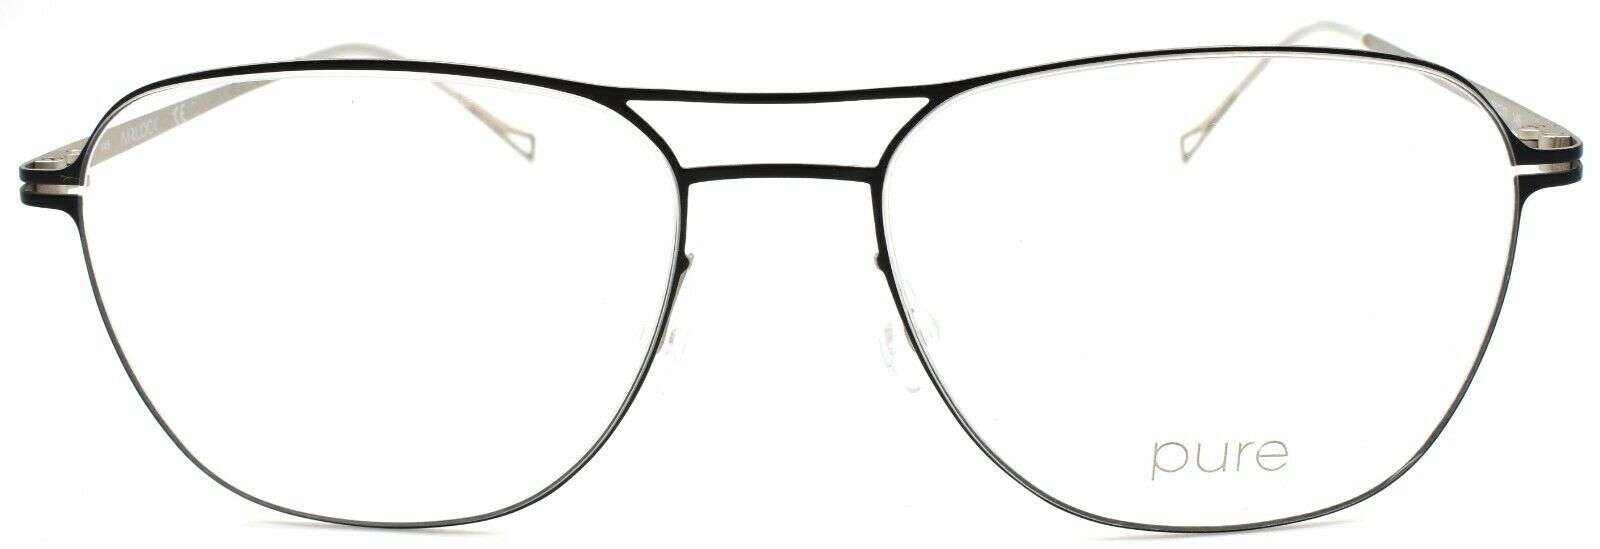 2-Marchon Airlock 4002 001 Men's Eyeglasses Frames Pilot Titanium 55-17-145 Black-886895451055-IKSpecs